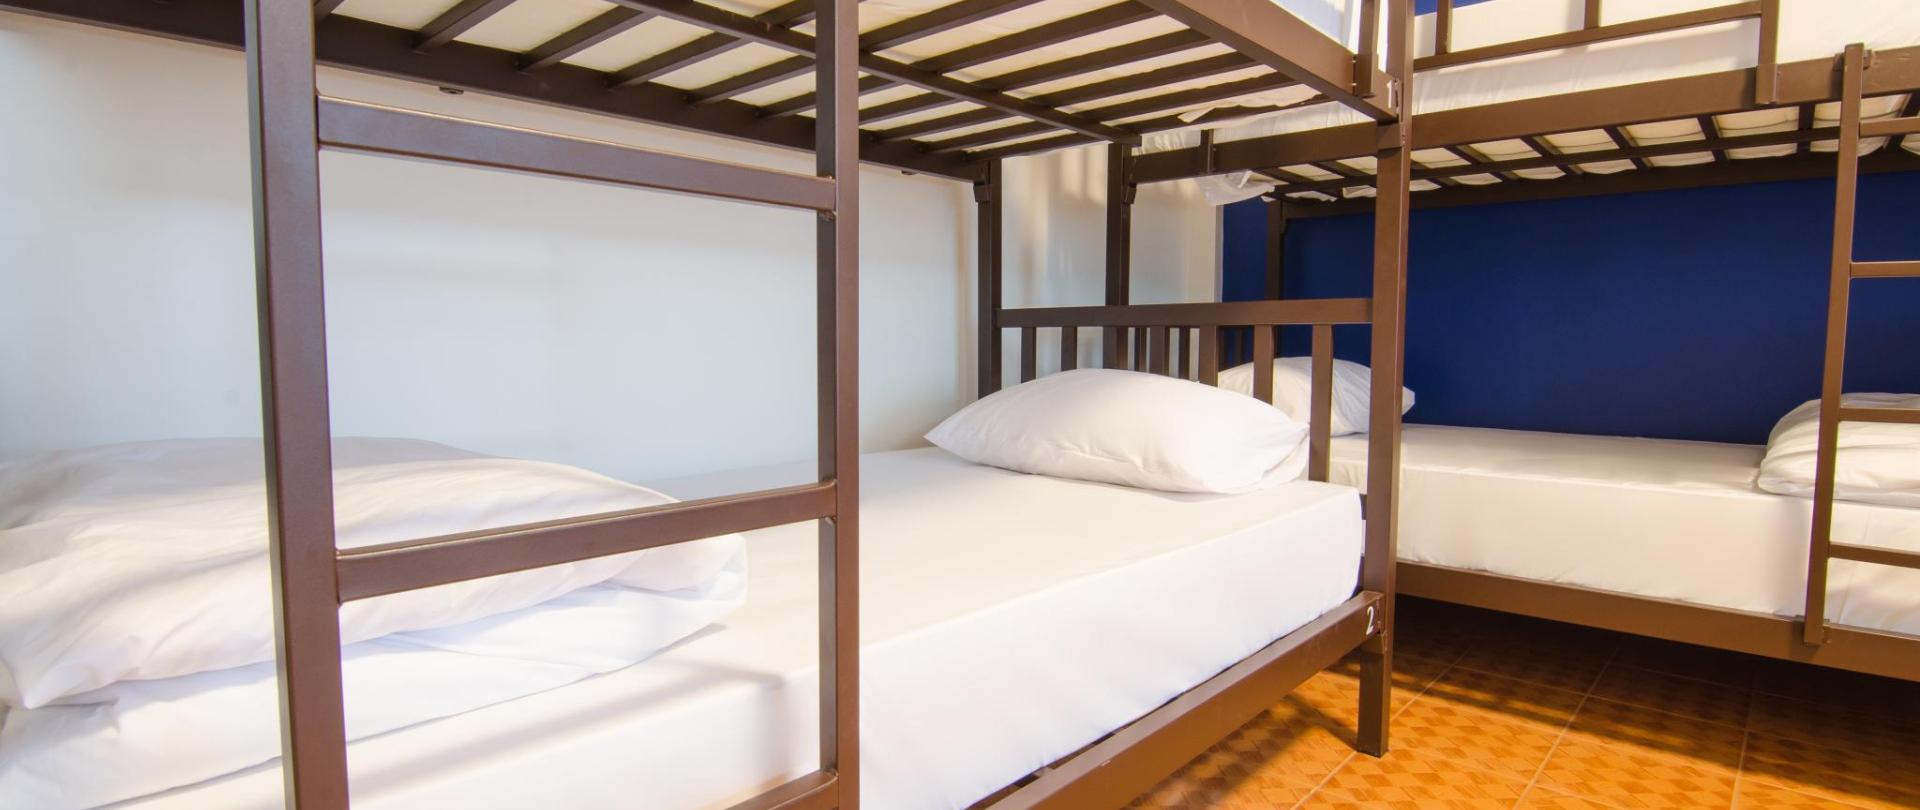 Discount [50% Off] Sleeper Hostel Thailand - Hotel Near Me | Hotel Normandie Reviews